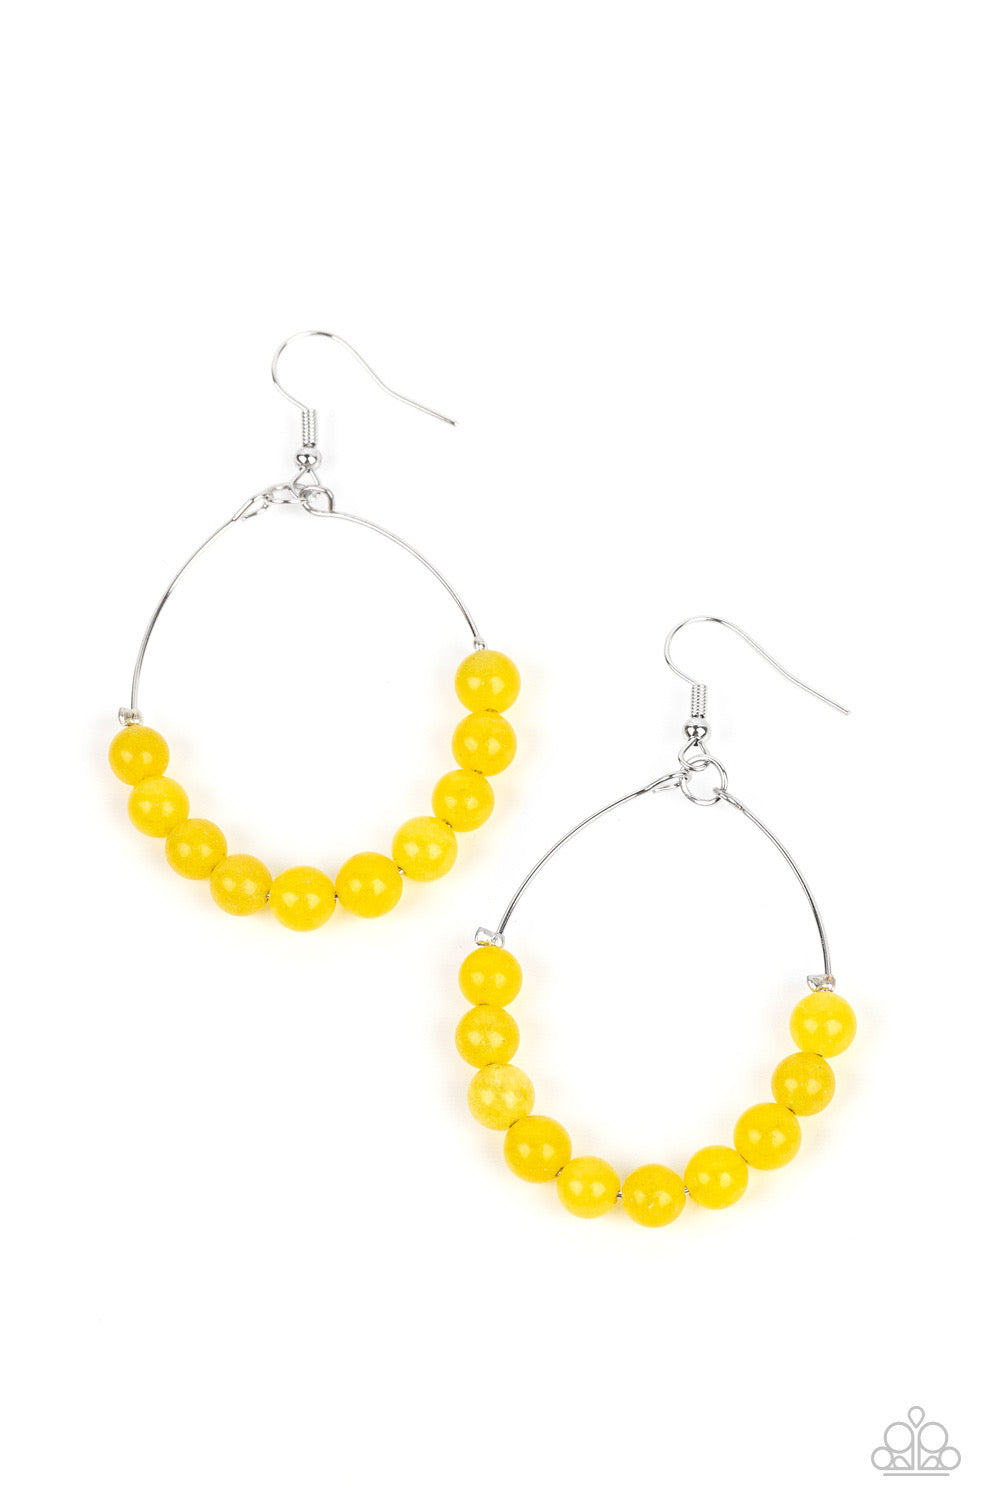 Bead Hoop Earrings - Paparazzi Catch a Breeze - Yellow Earrings Paparazzi Jewelry Images 